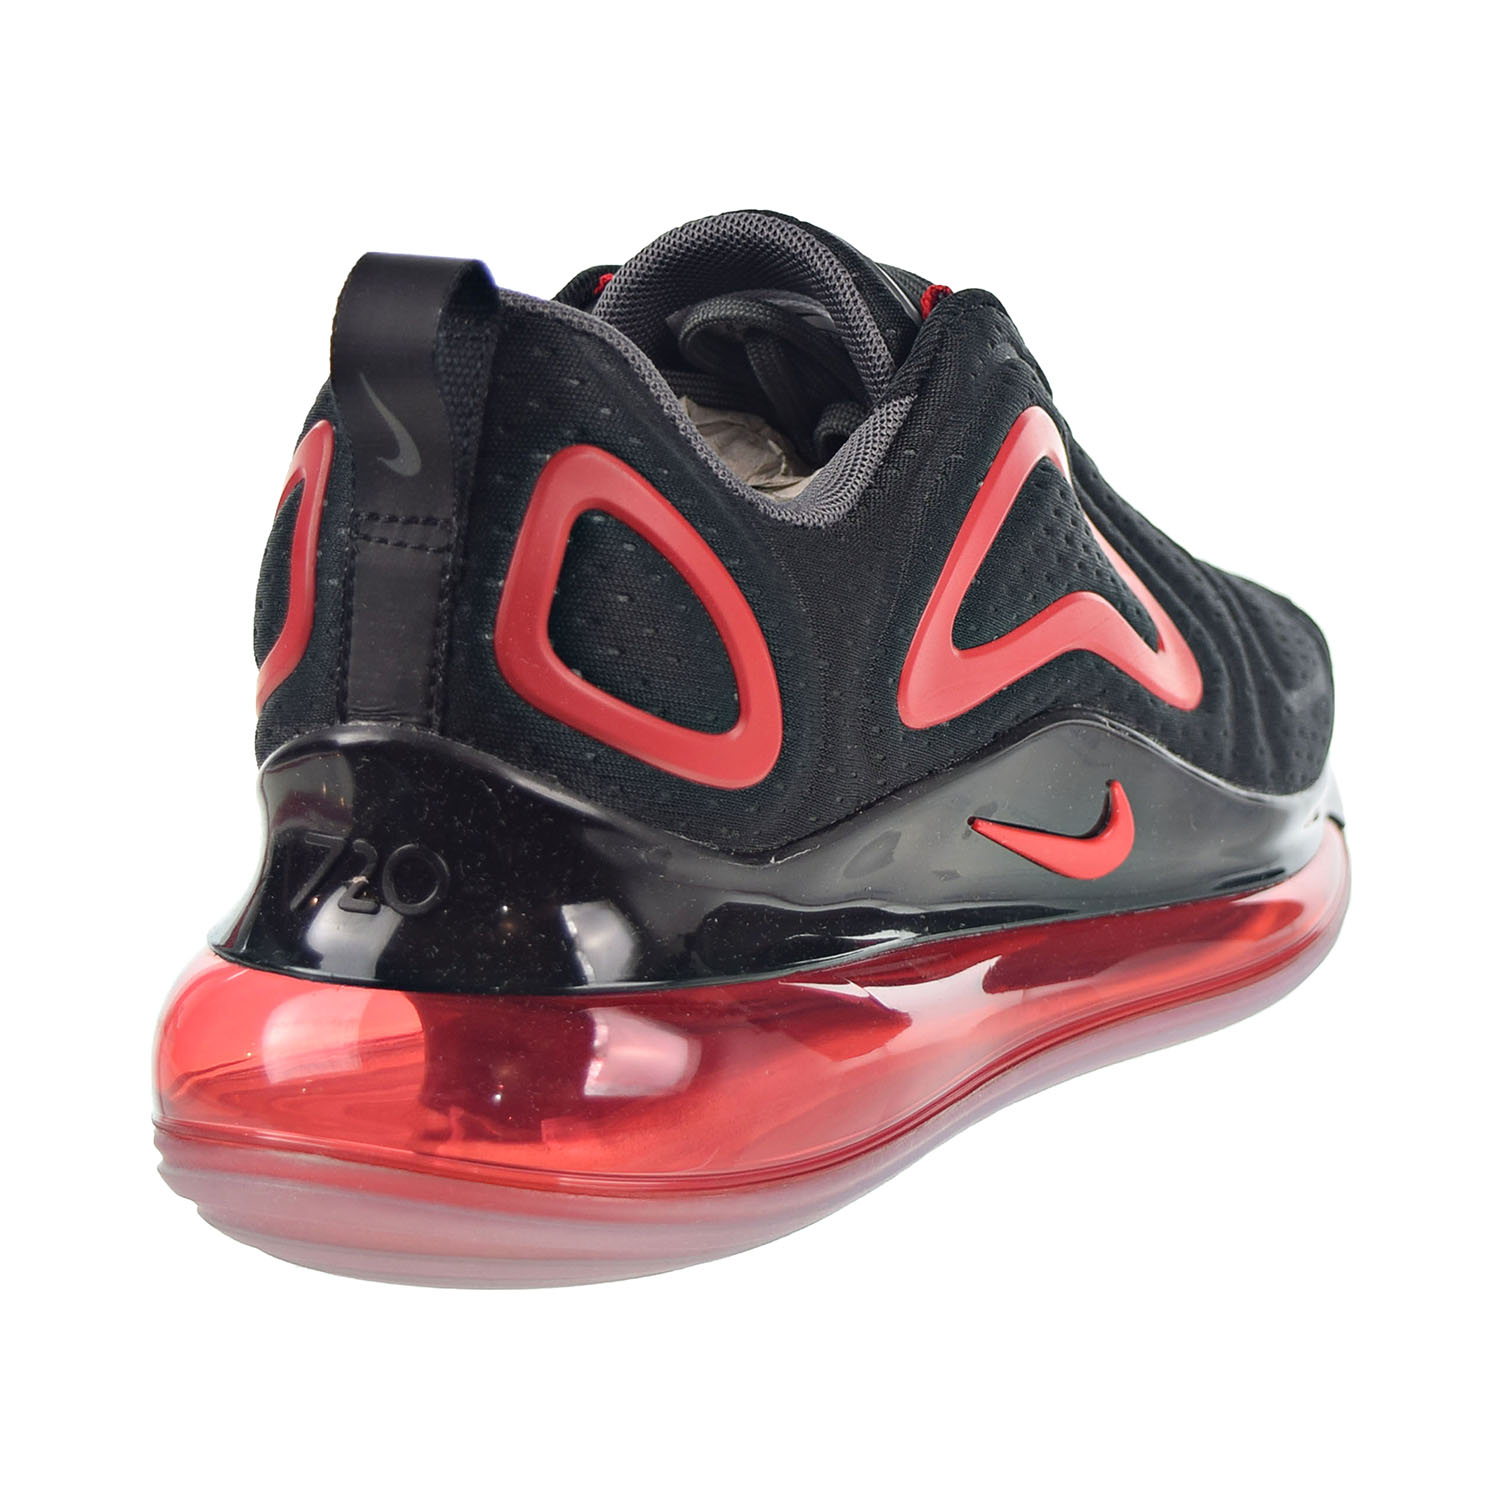 Nike Air Max 720-Mesh Men's Shoes Black-University Red cn9833-001 - image 3 of 6